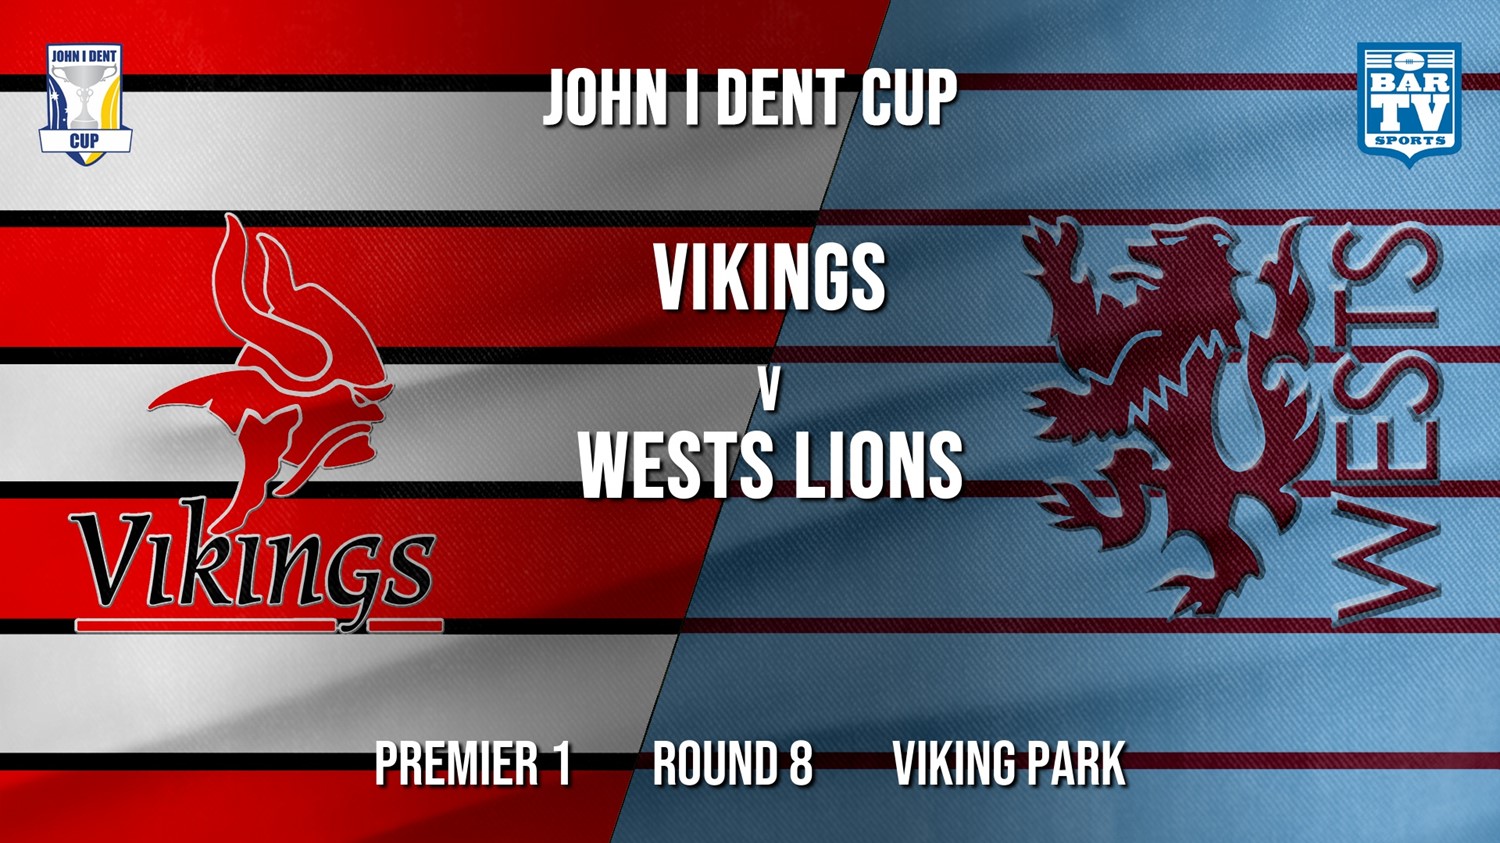 John I Dent Round 8 - Premier 1 - Tuggeranong Vikings v Wests Lions Minigame Slate Image